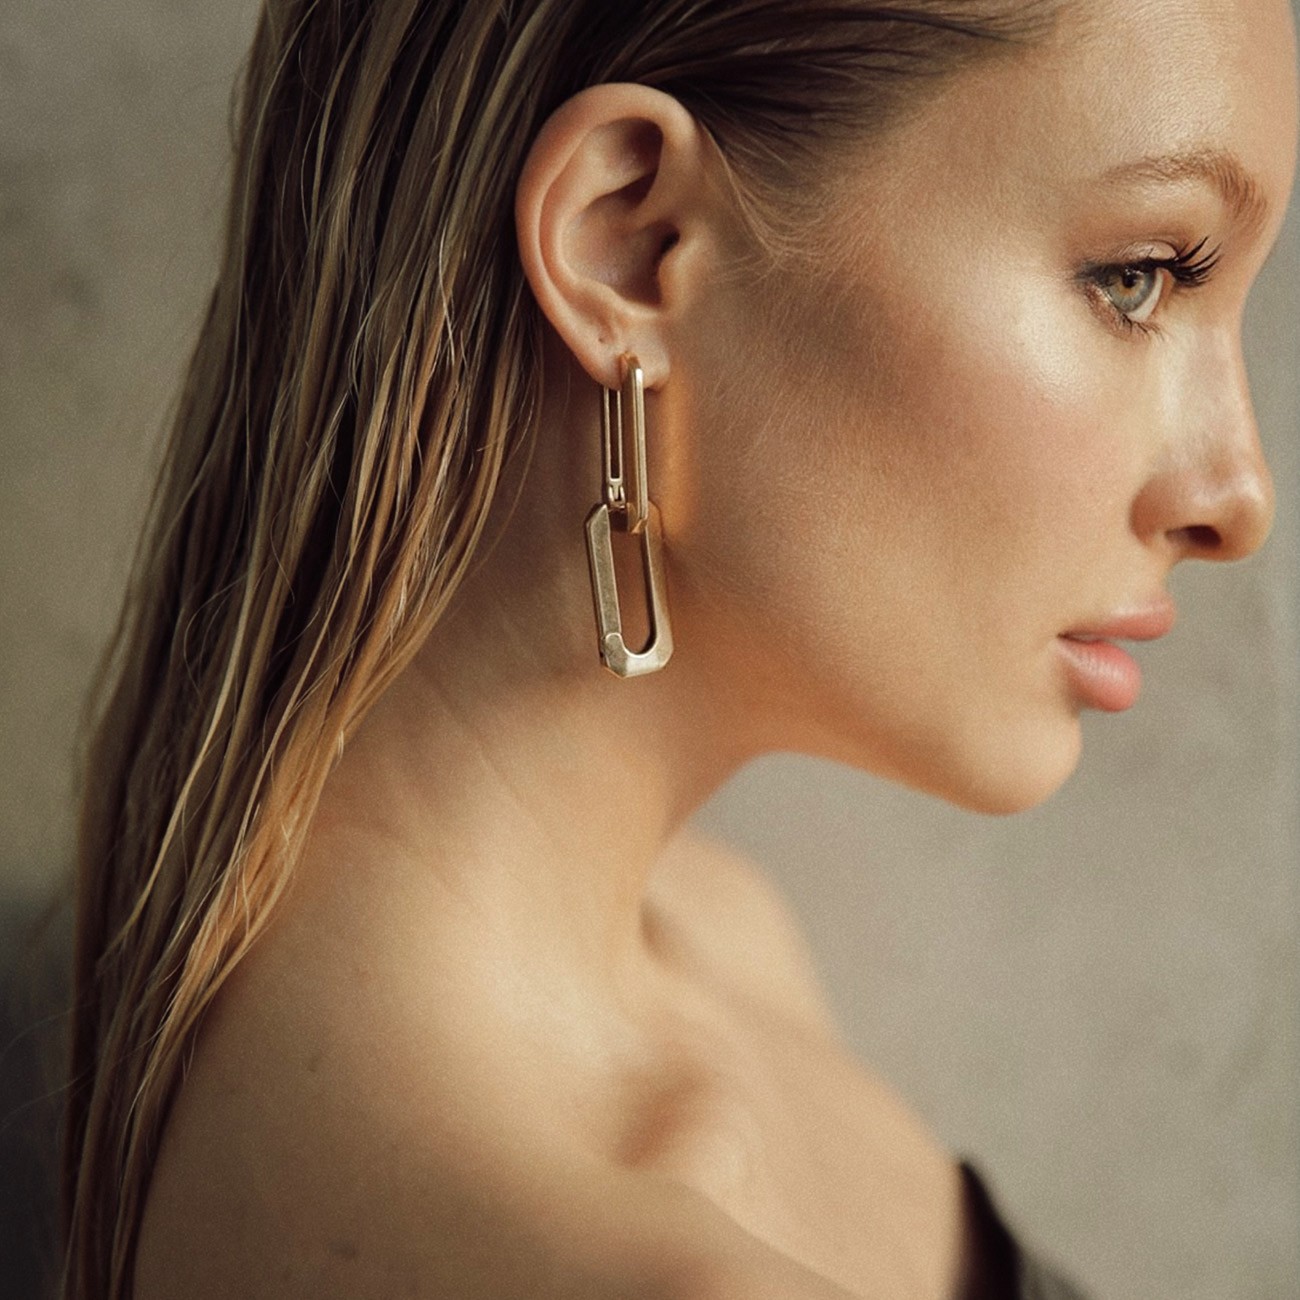 Geometric rectangles earrings - large, sterling silver 925